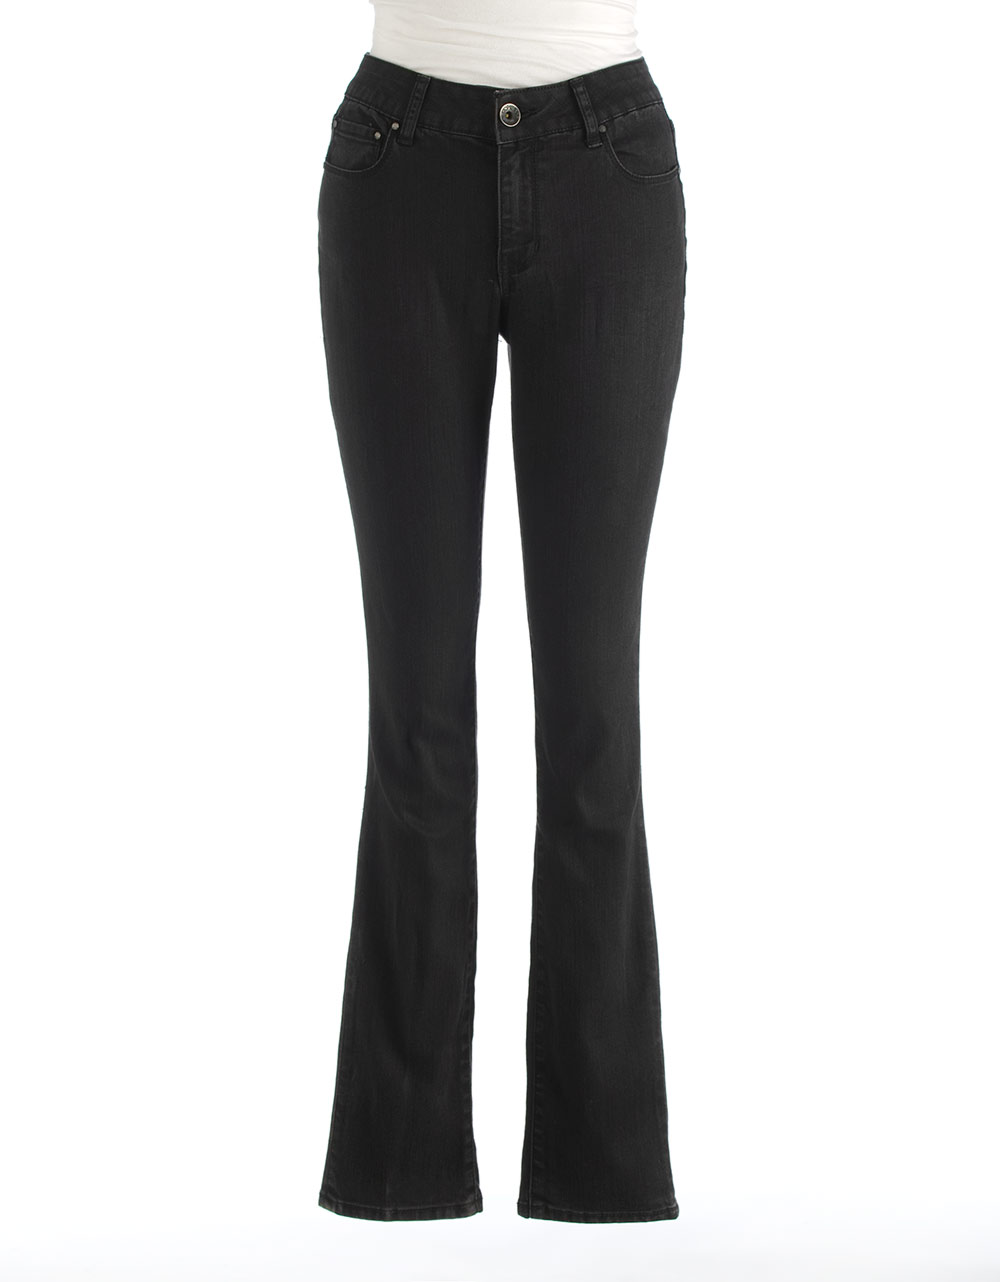 Dkny Soho Skinny Jeans in Black (twilight w) | Lyst